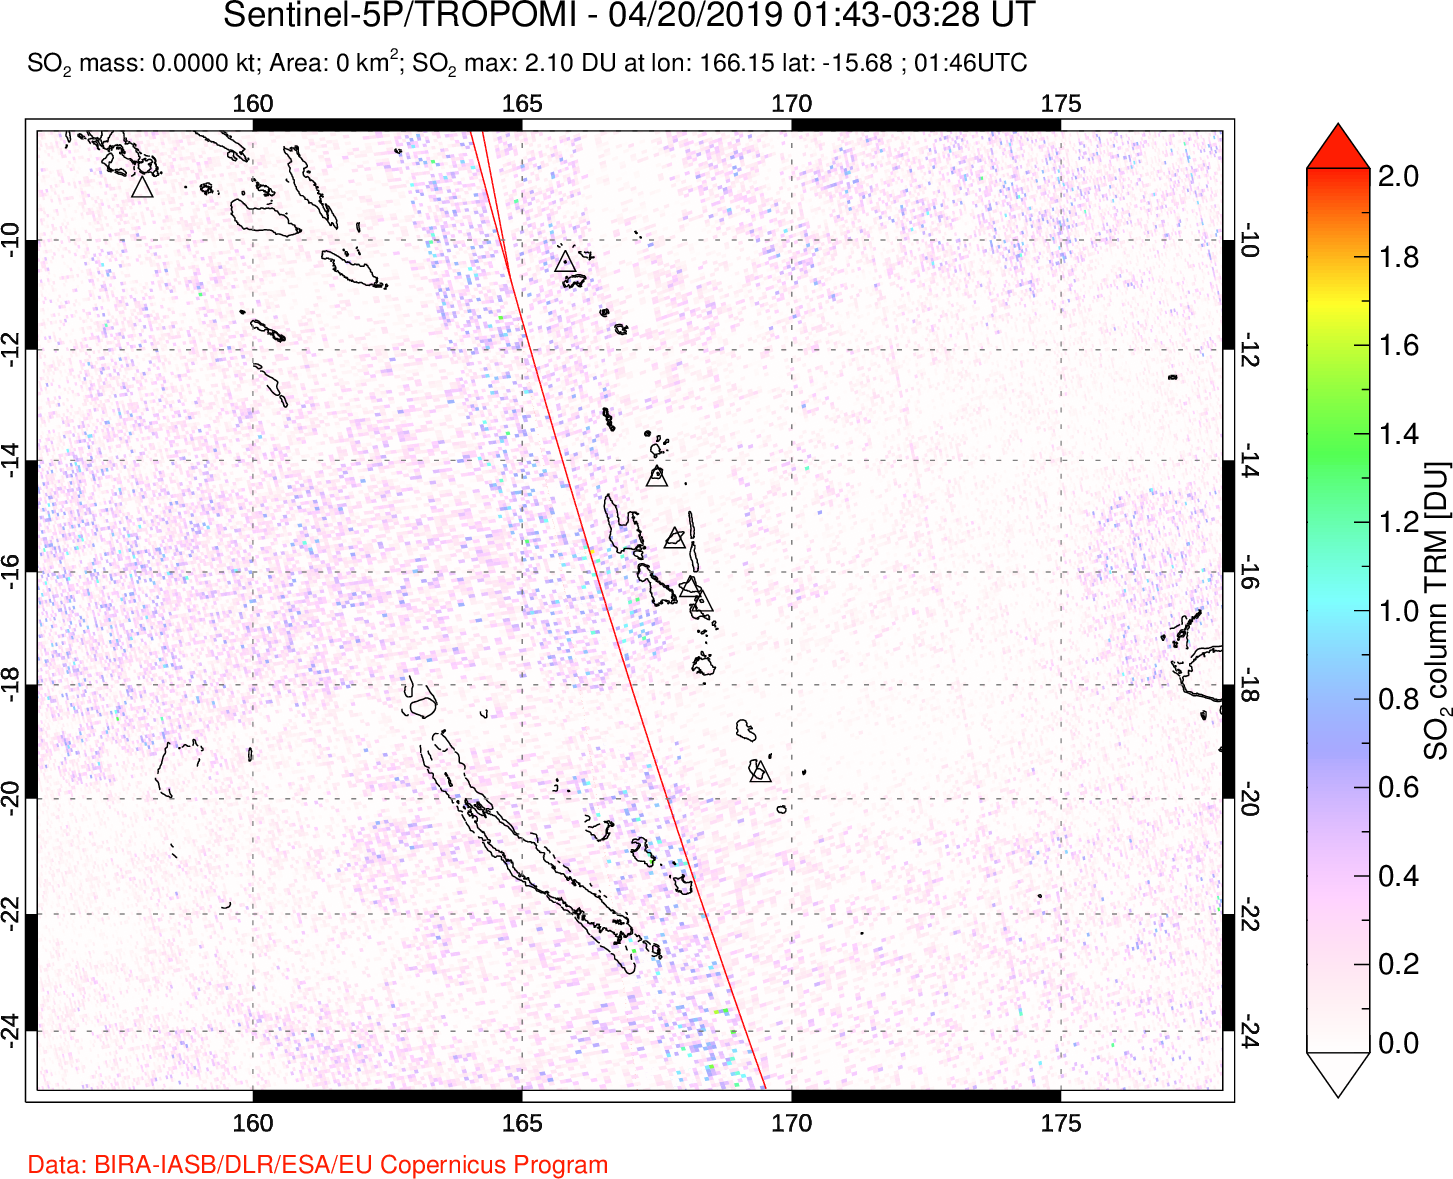 A sulfur dioxide image over Vanuatu, South Pacific on Apr 20, 2019.